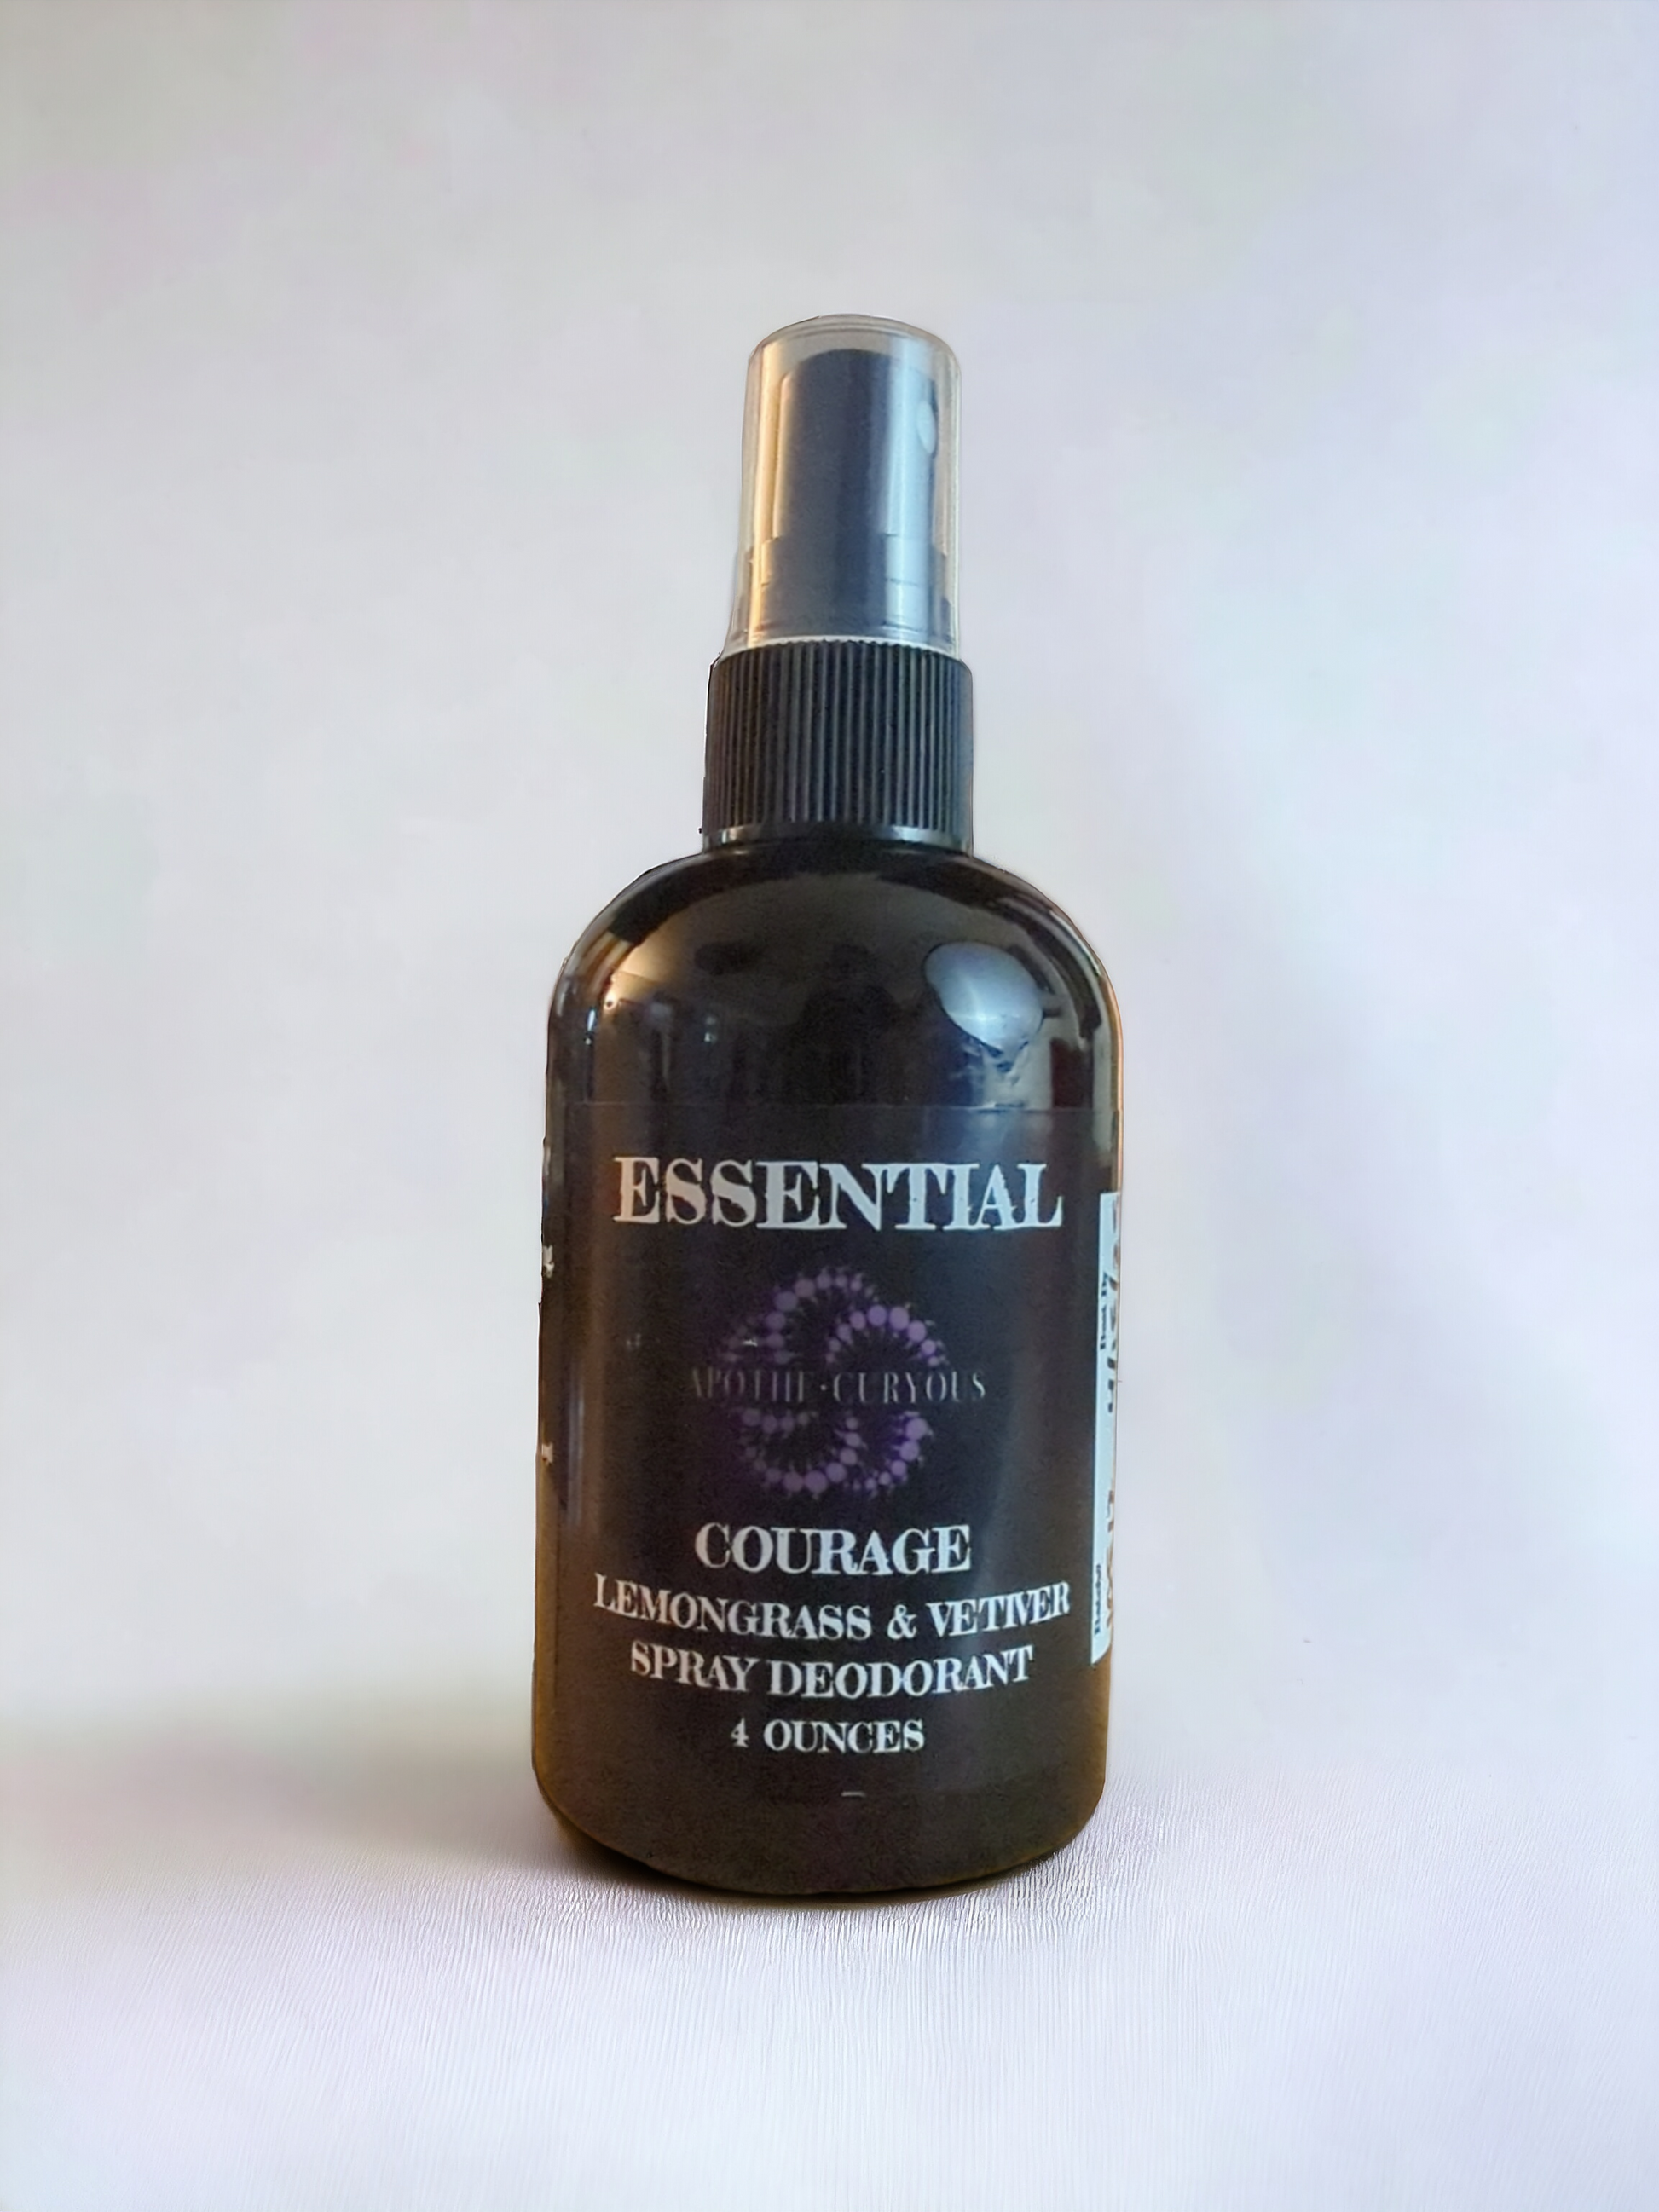 Essential spray deodorant, Courage scent option, Apothecuryous